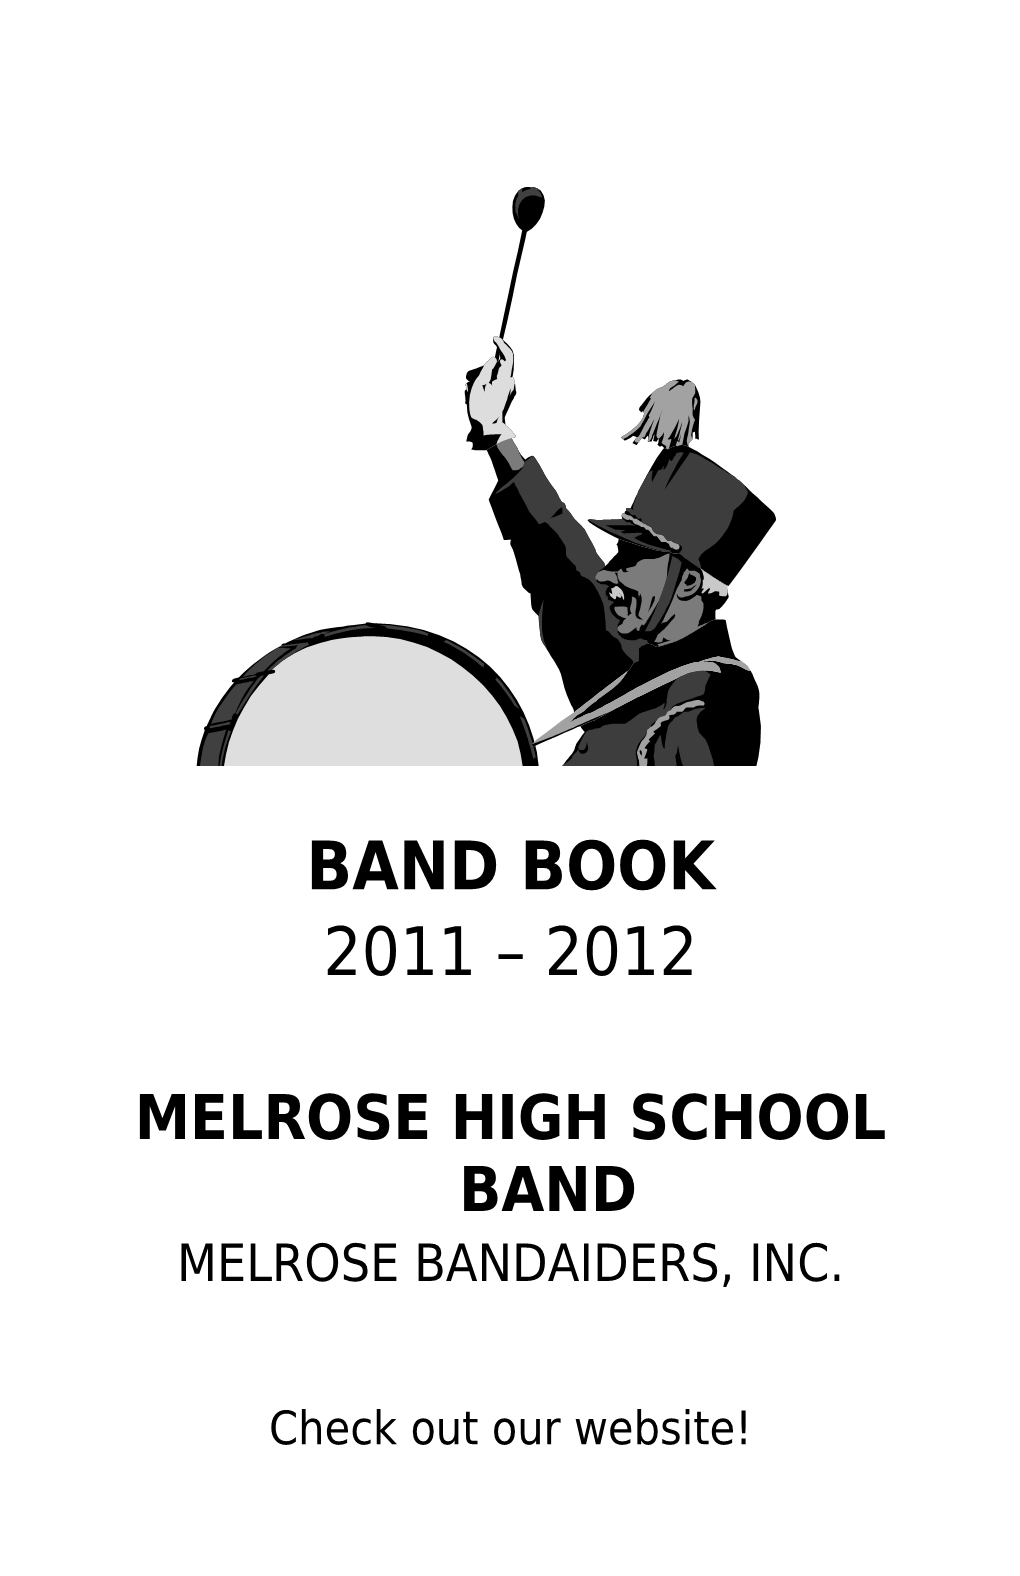 Melrose High School Band